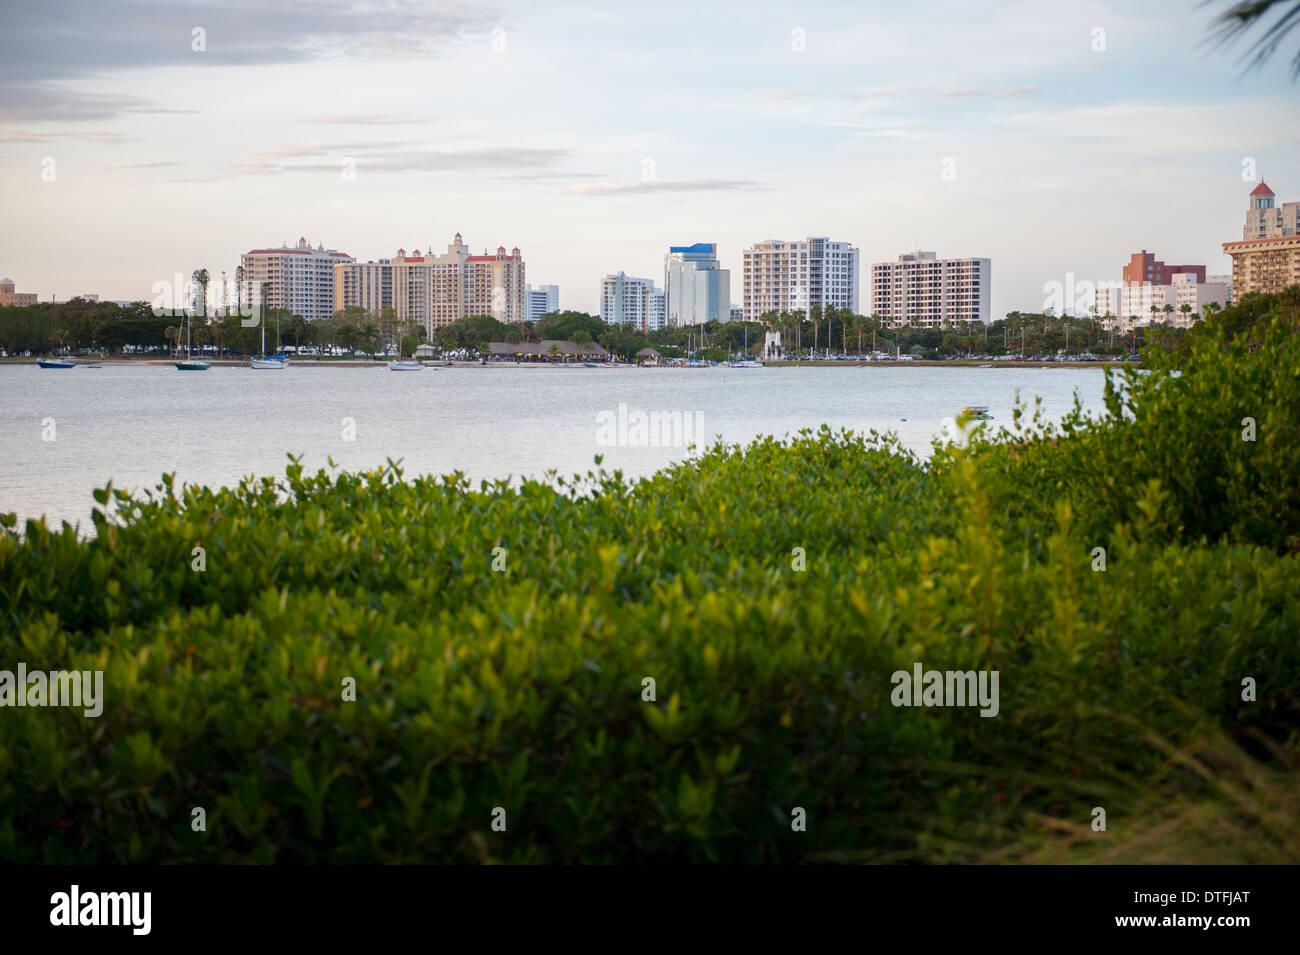 USA Florida Sarasota FL skyline on Sarasota Bay high rise condos condominiums apartments and offices Stock Photo